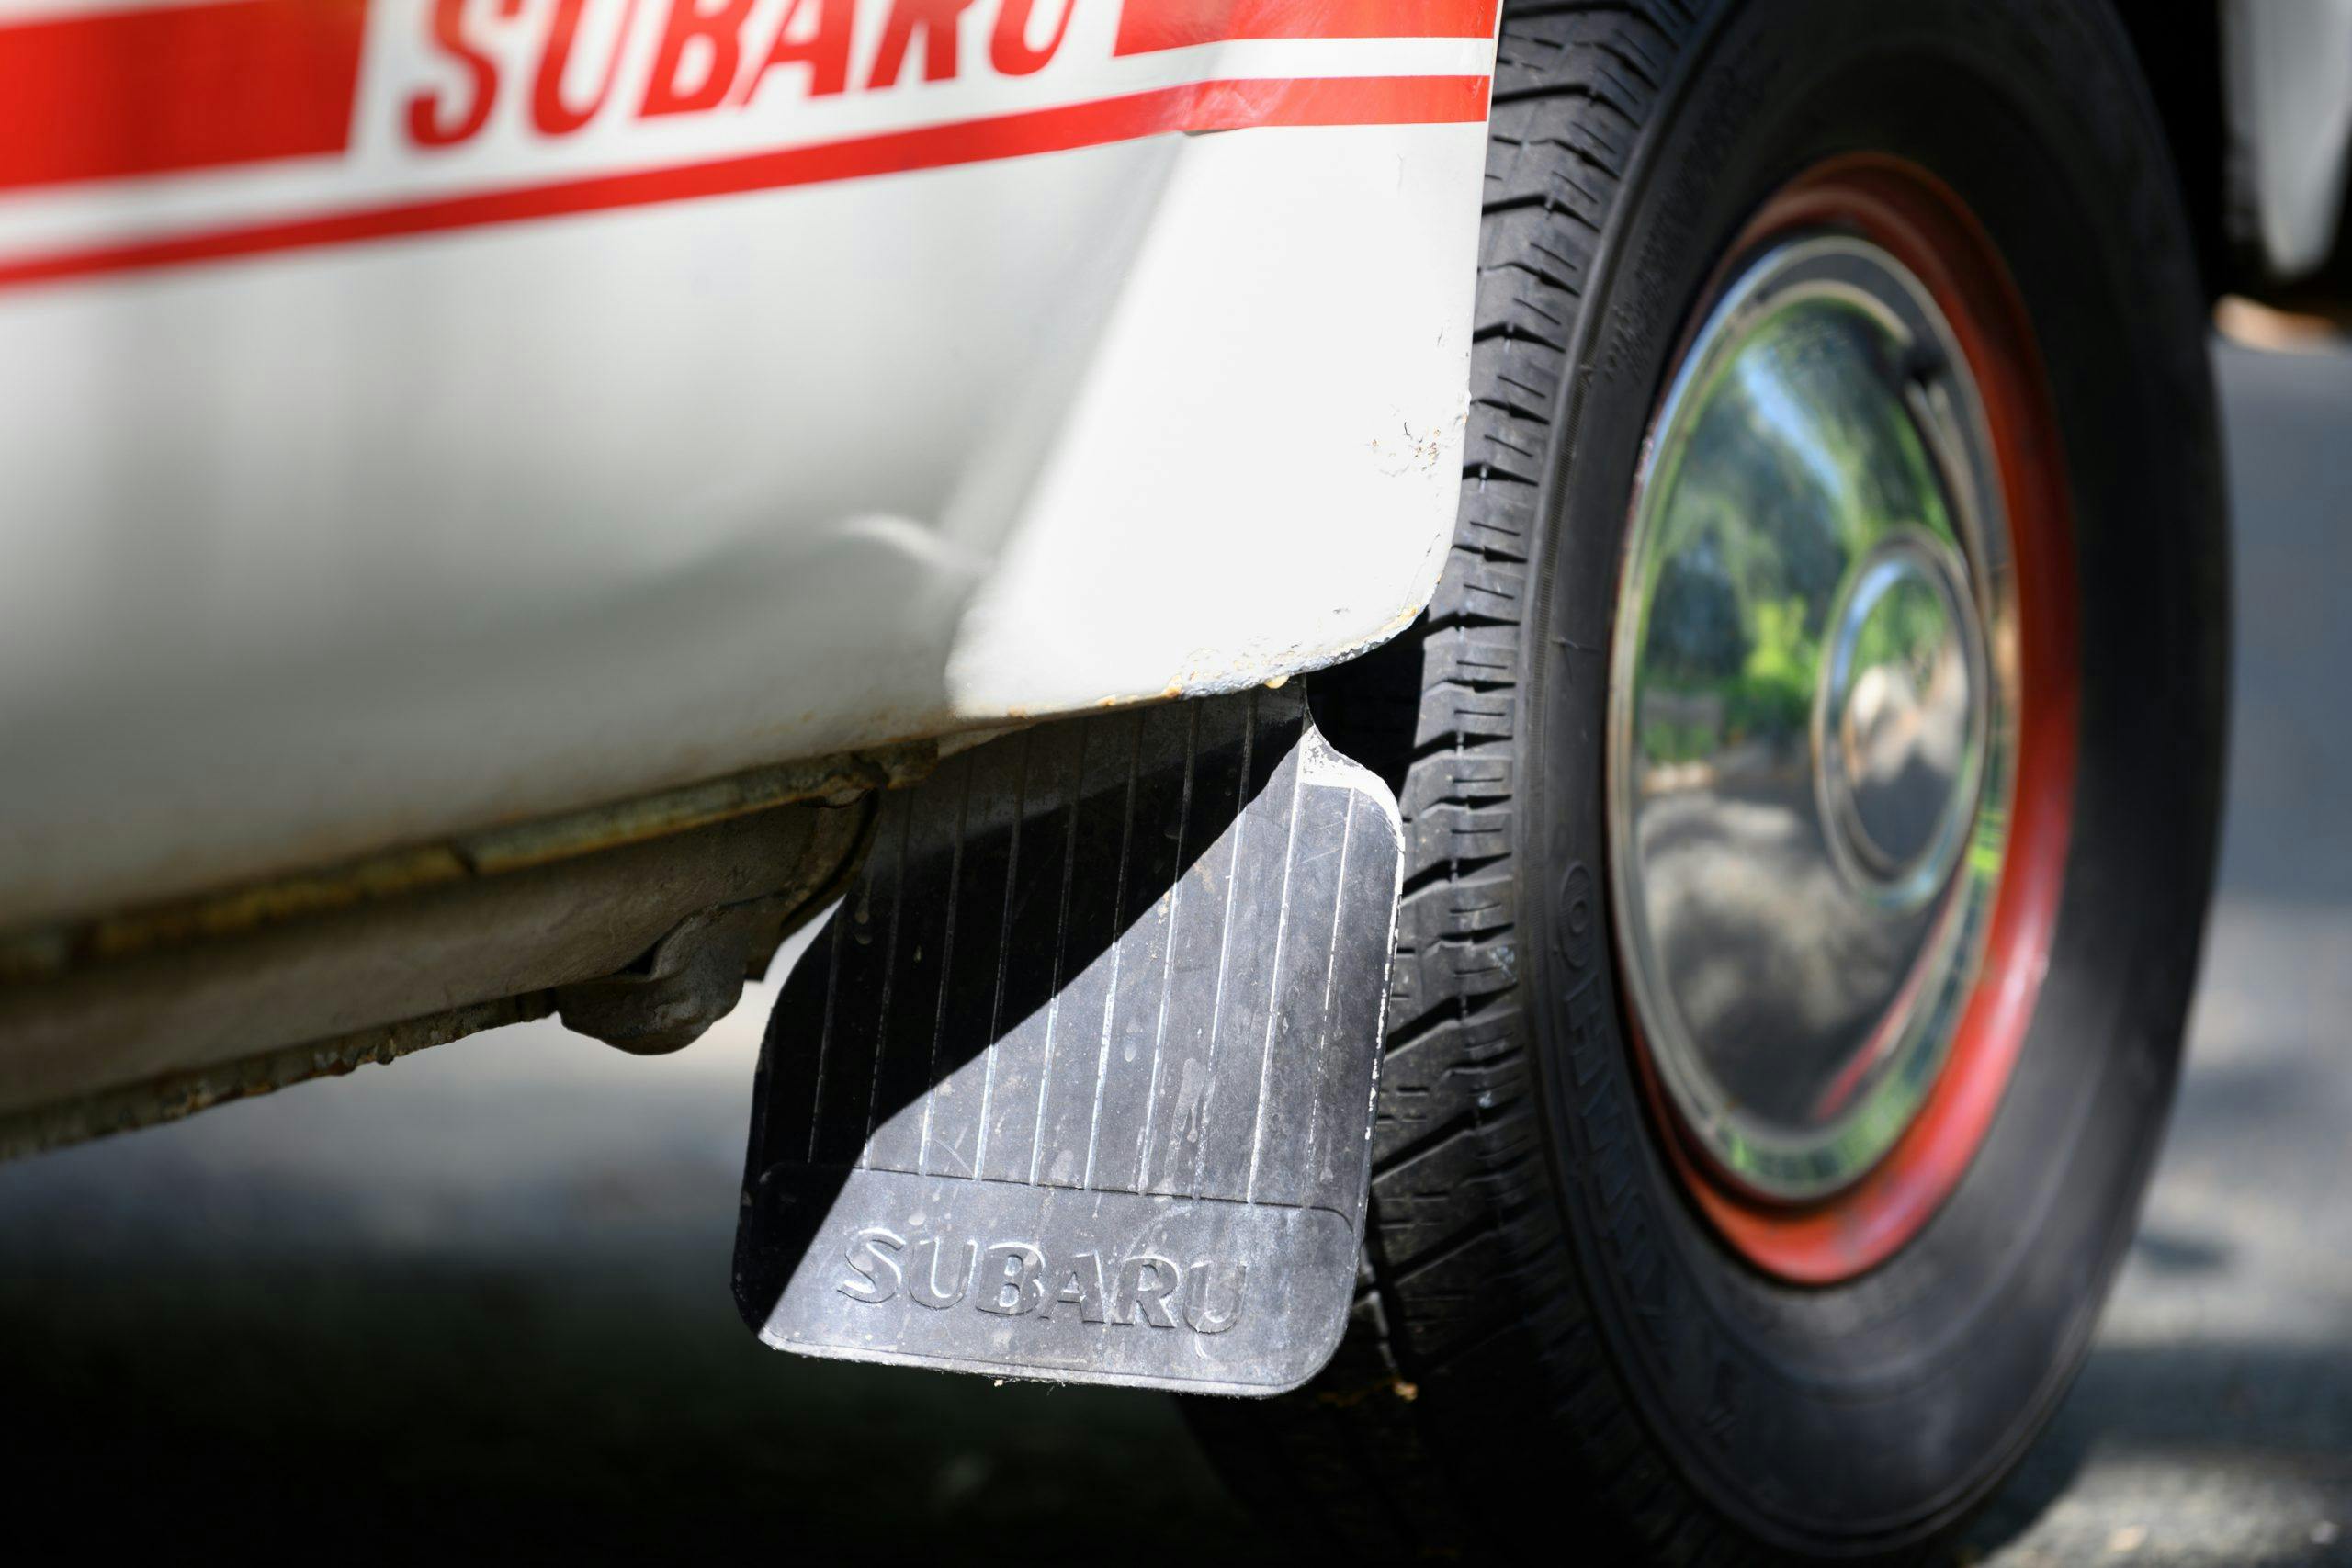 Subaru 360 mudflap detail